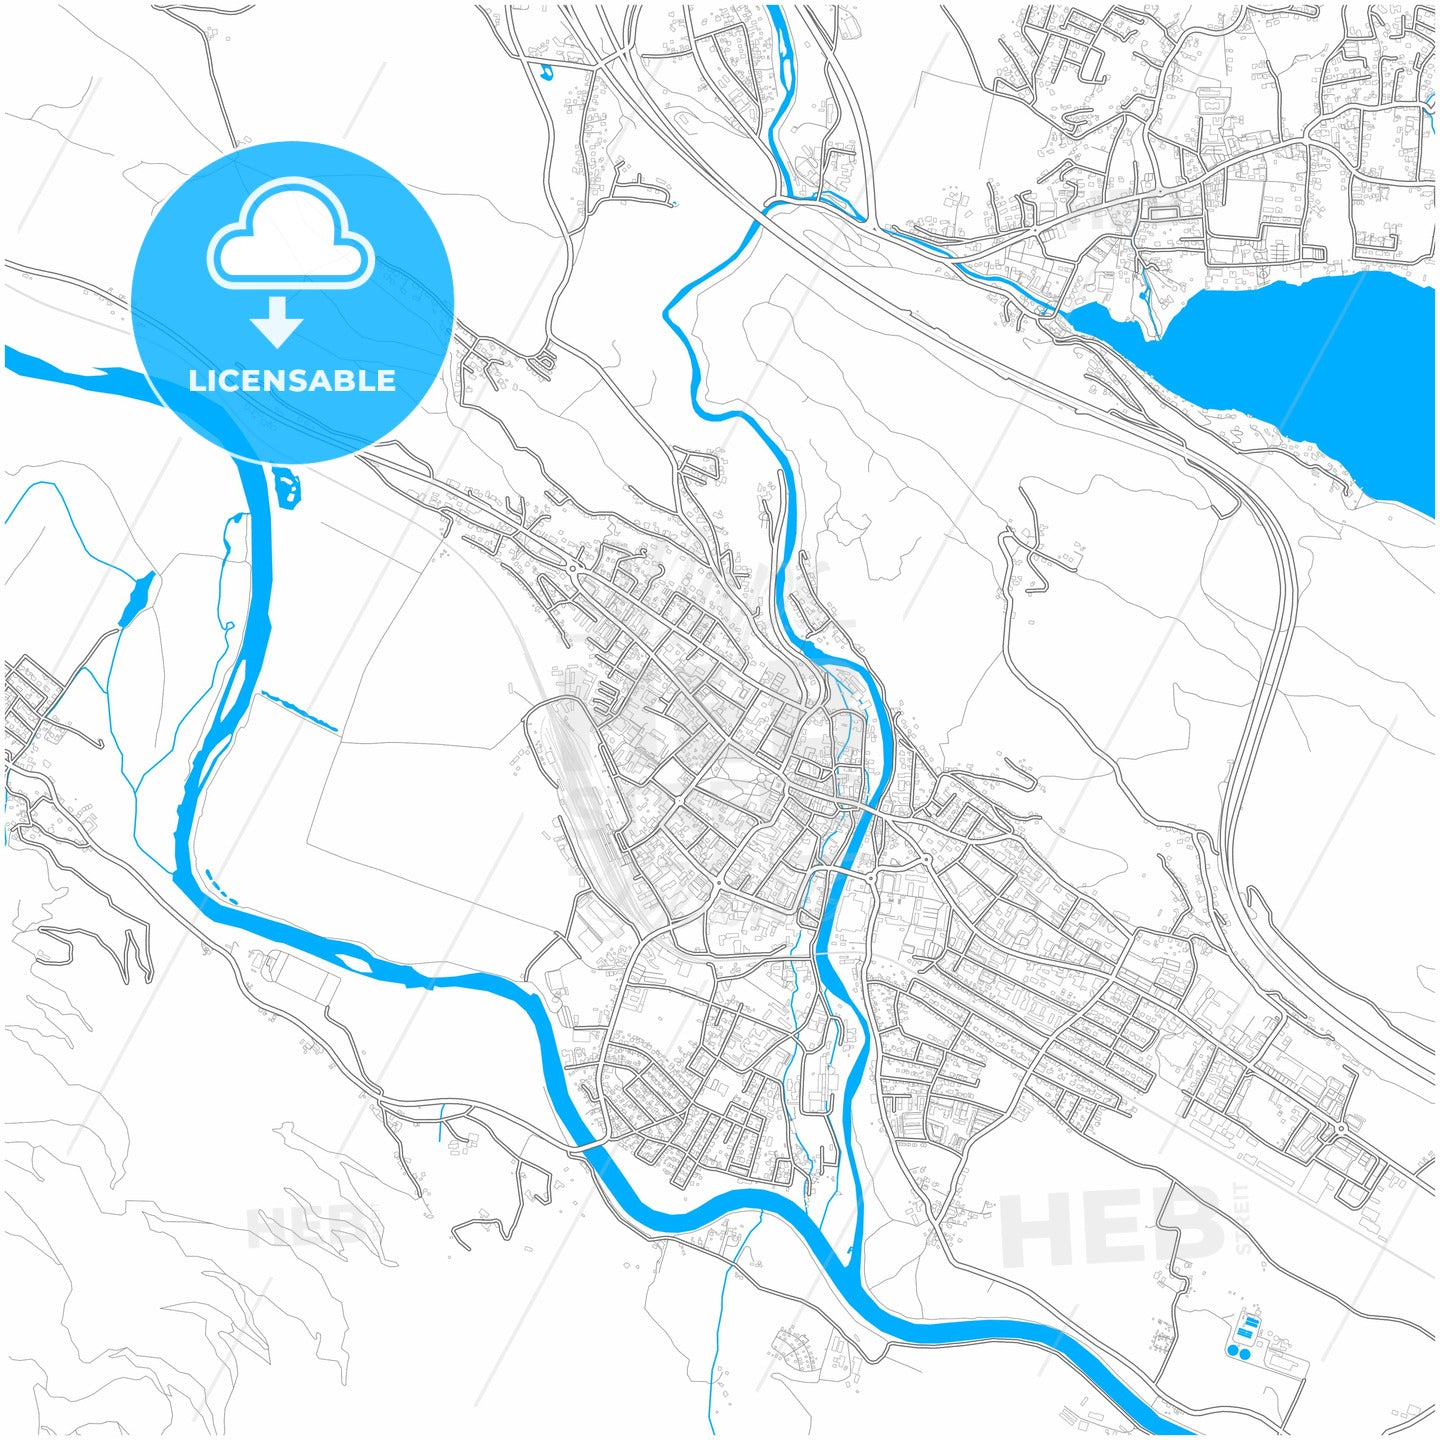 Spittal an der Drau, Carinthia, Austria, city map with high quality roads.